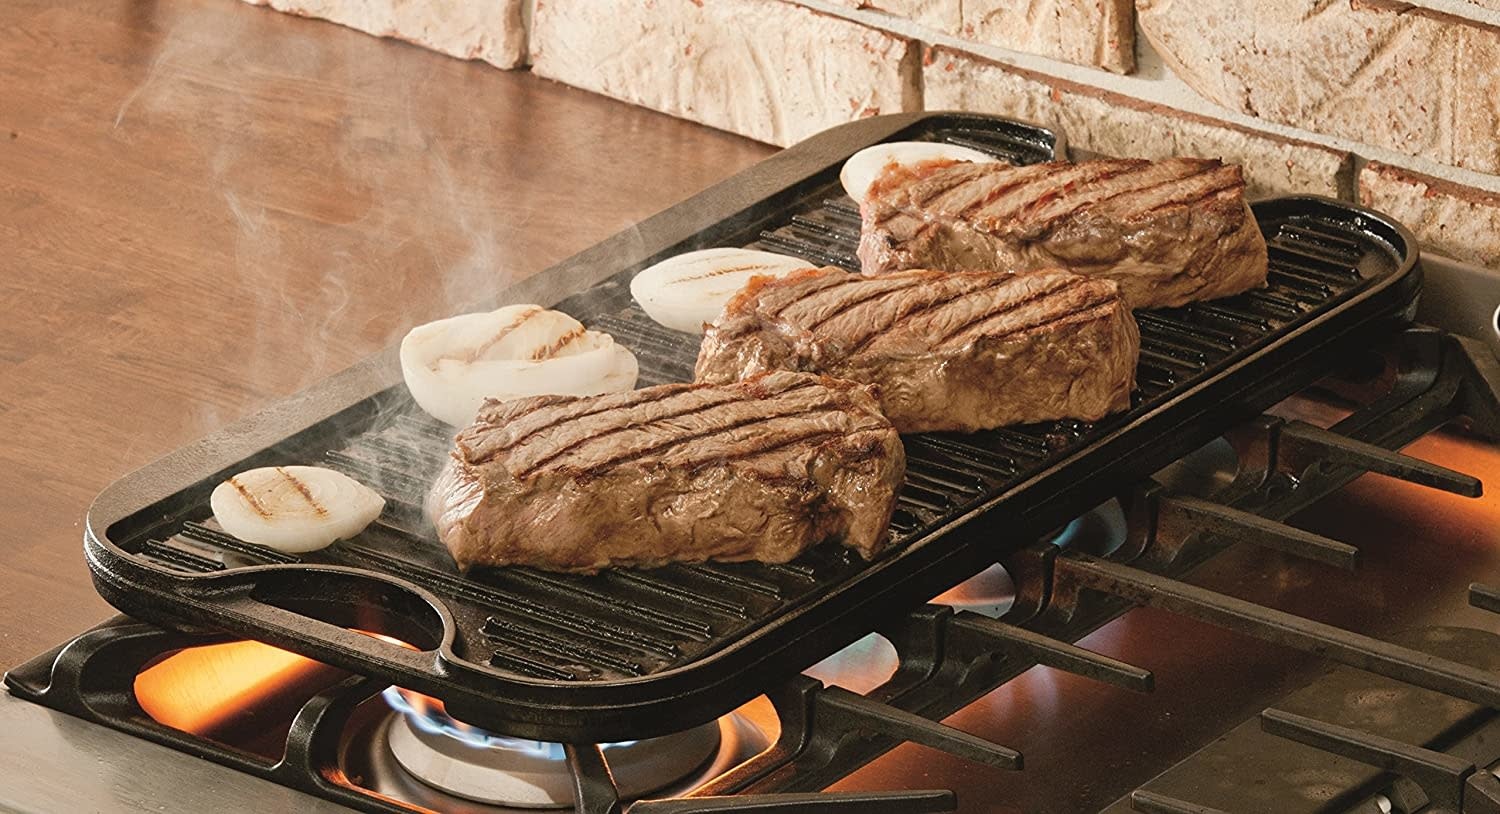 Lodge Cast Iron reversible baking sheet/grill